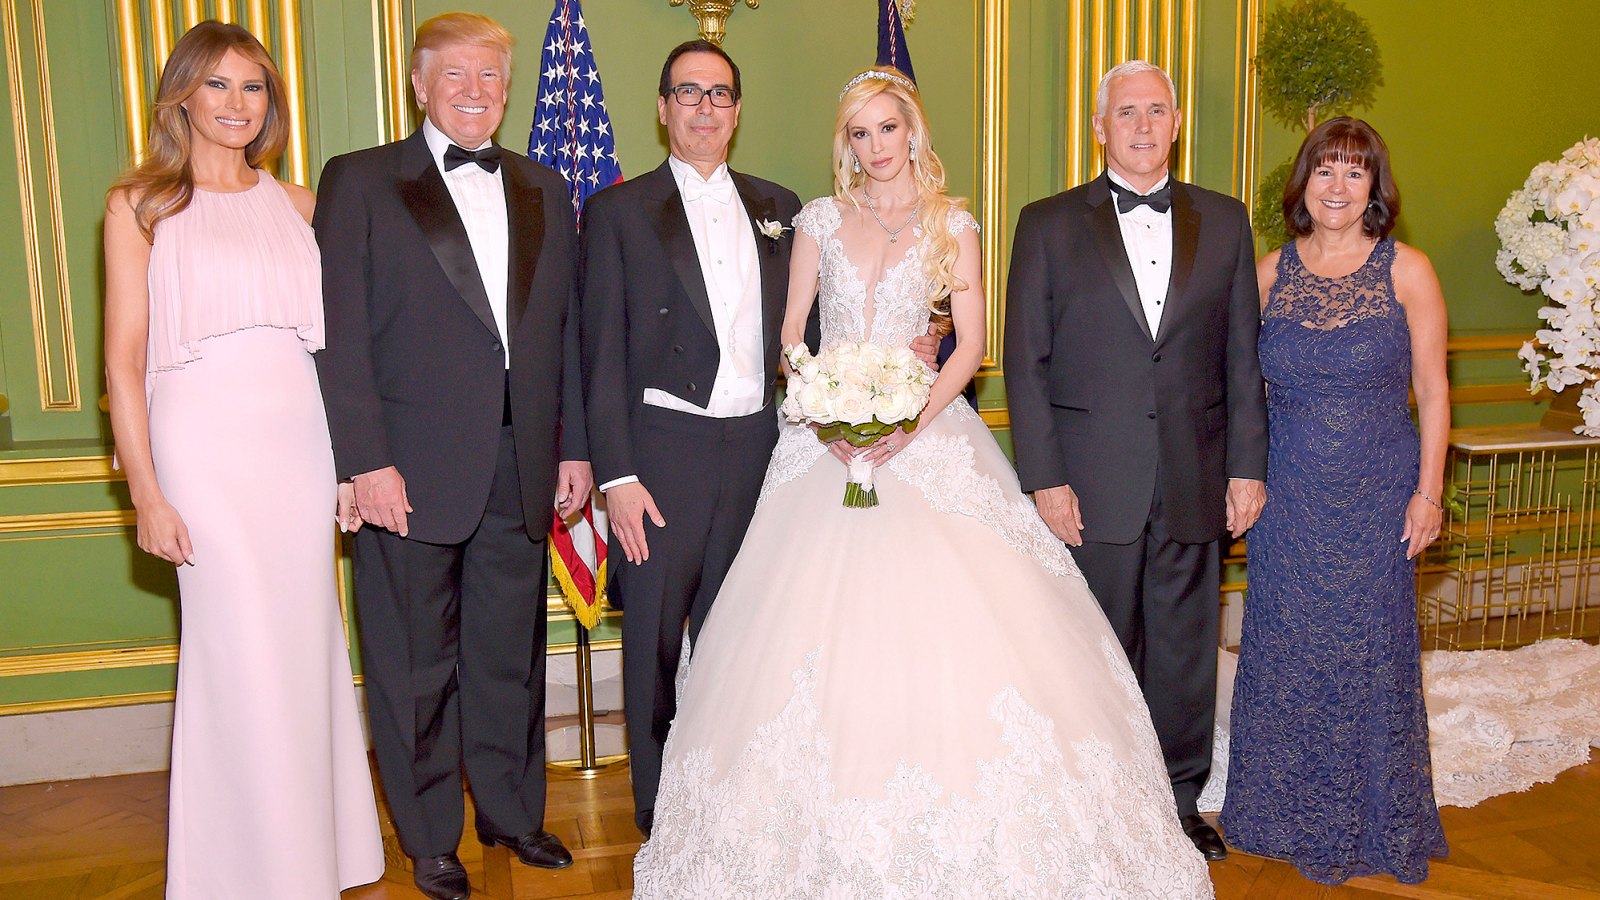 Melania Trump, Donald Trump, Steven Mnuchin, Louise Linton, Mike Pence and Karen Pence